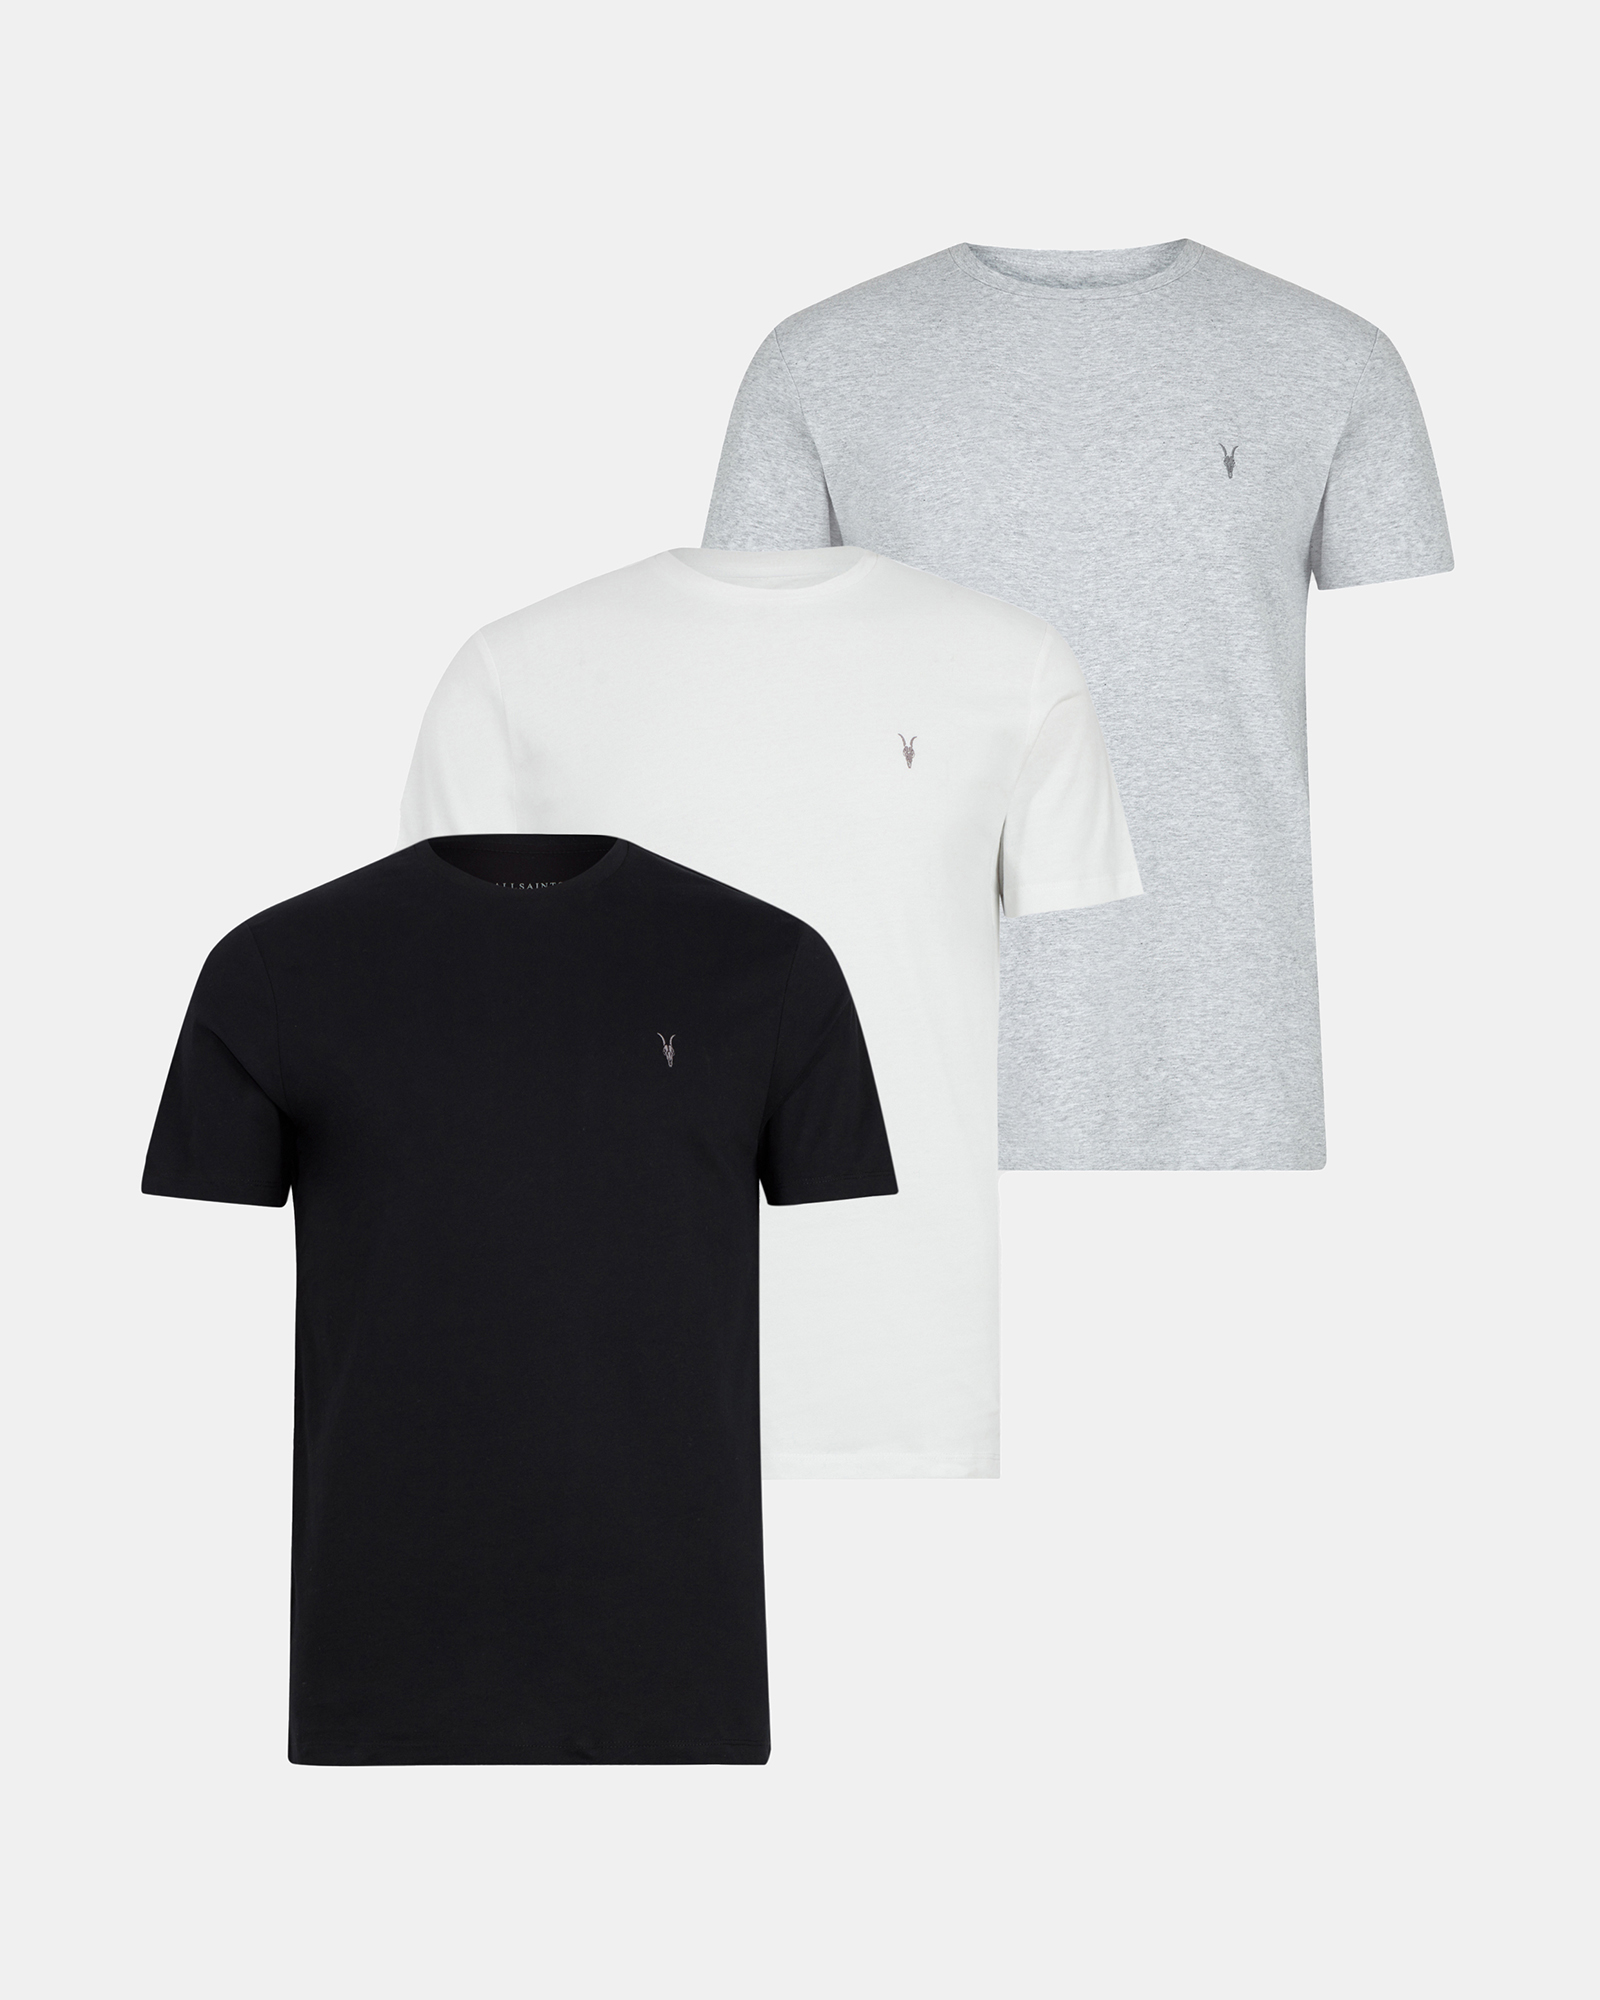 AllSaints Men's Cotton Tonic Crew T-Shirt 3 Pack, White, Black and Grey